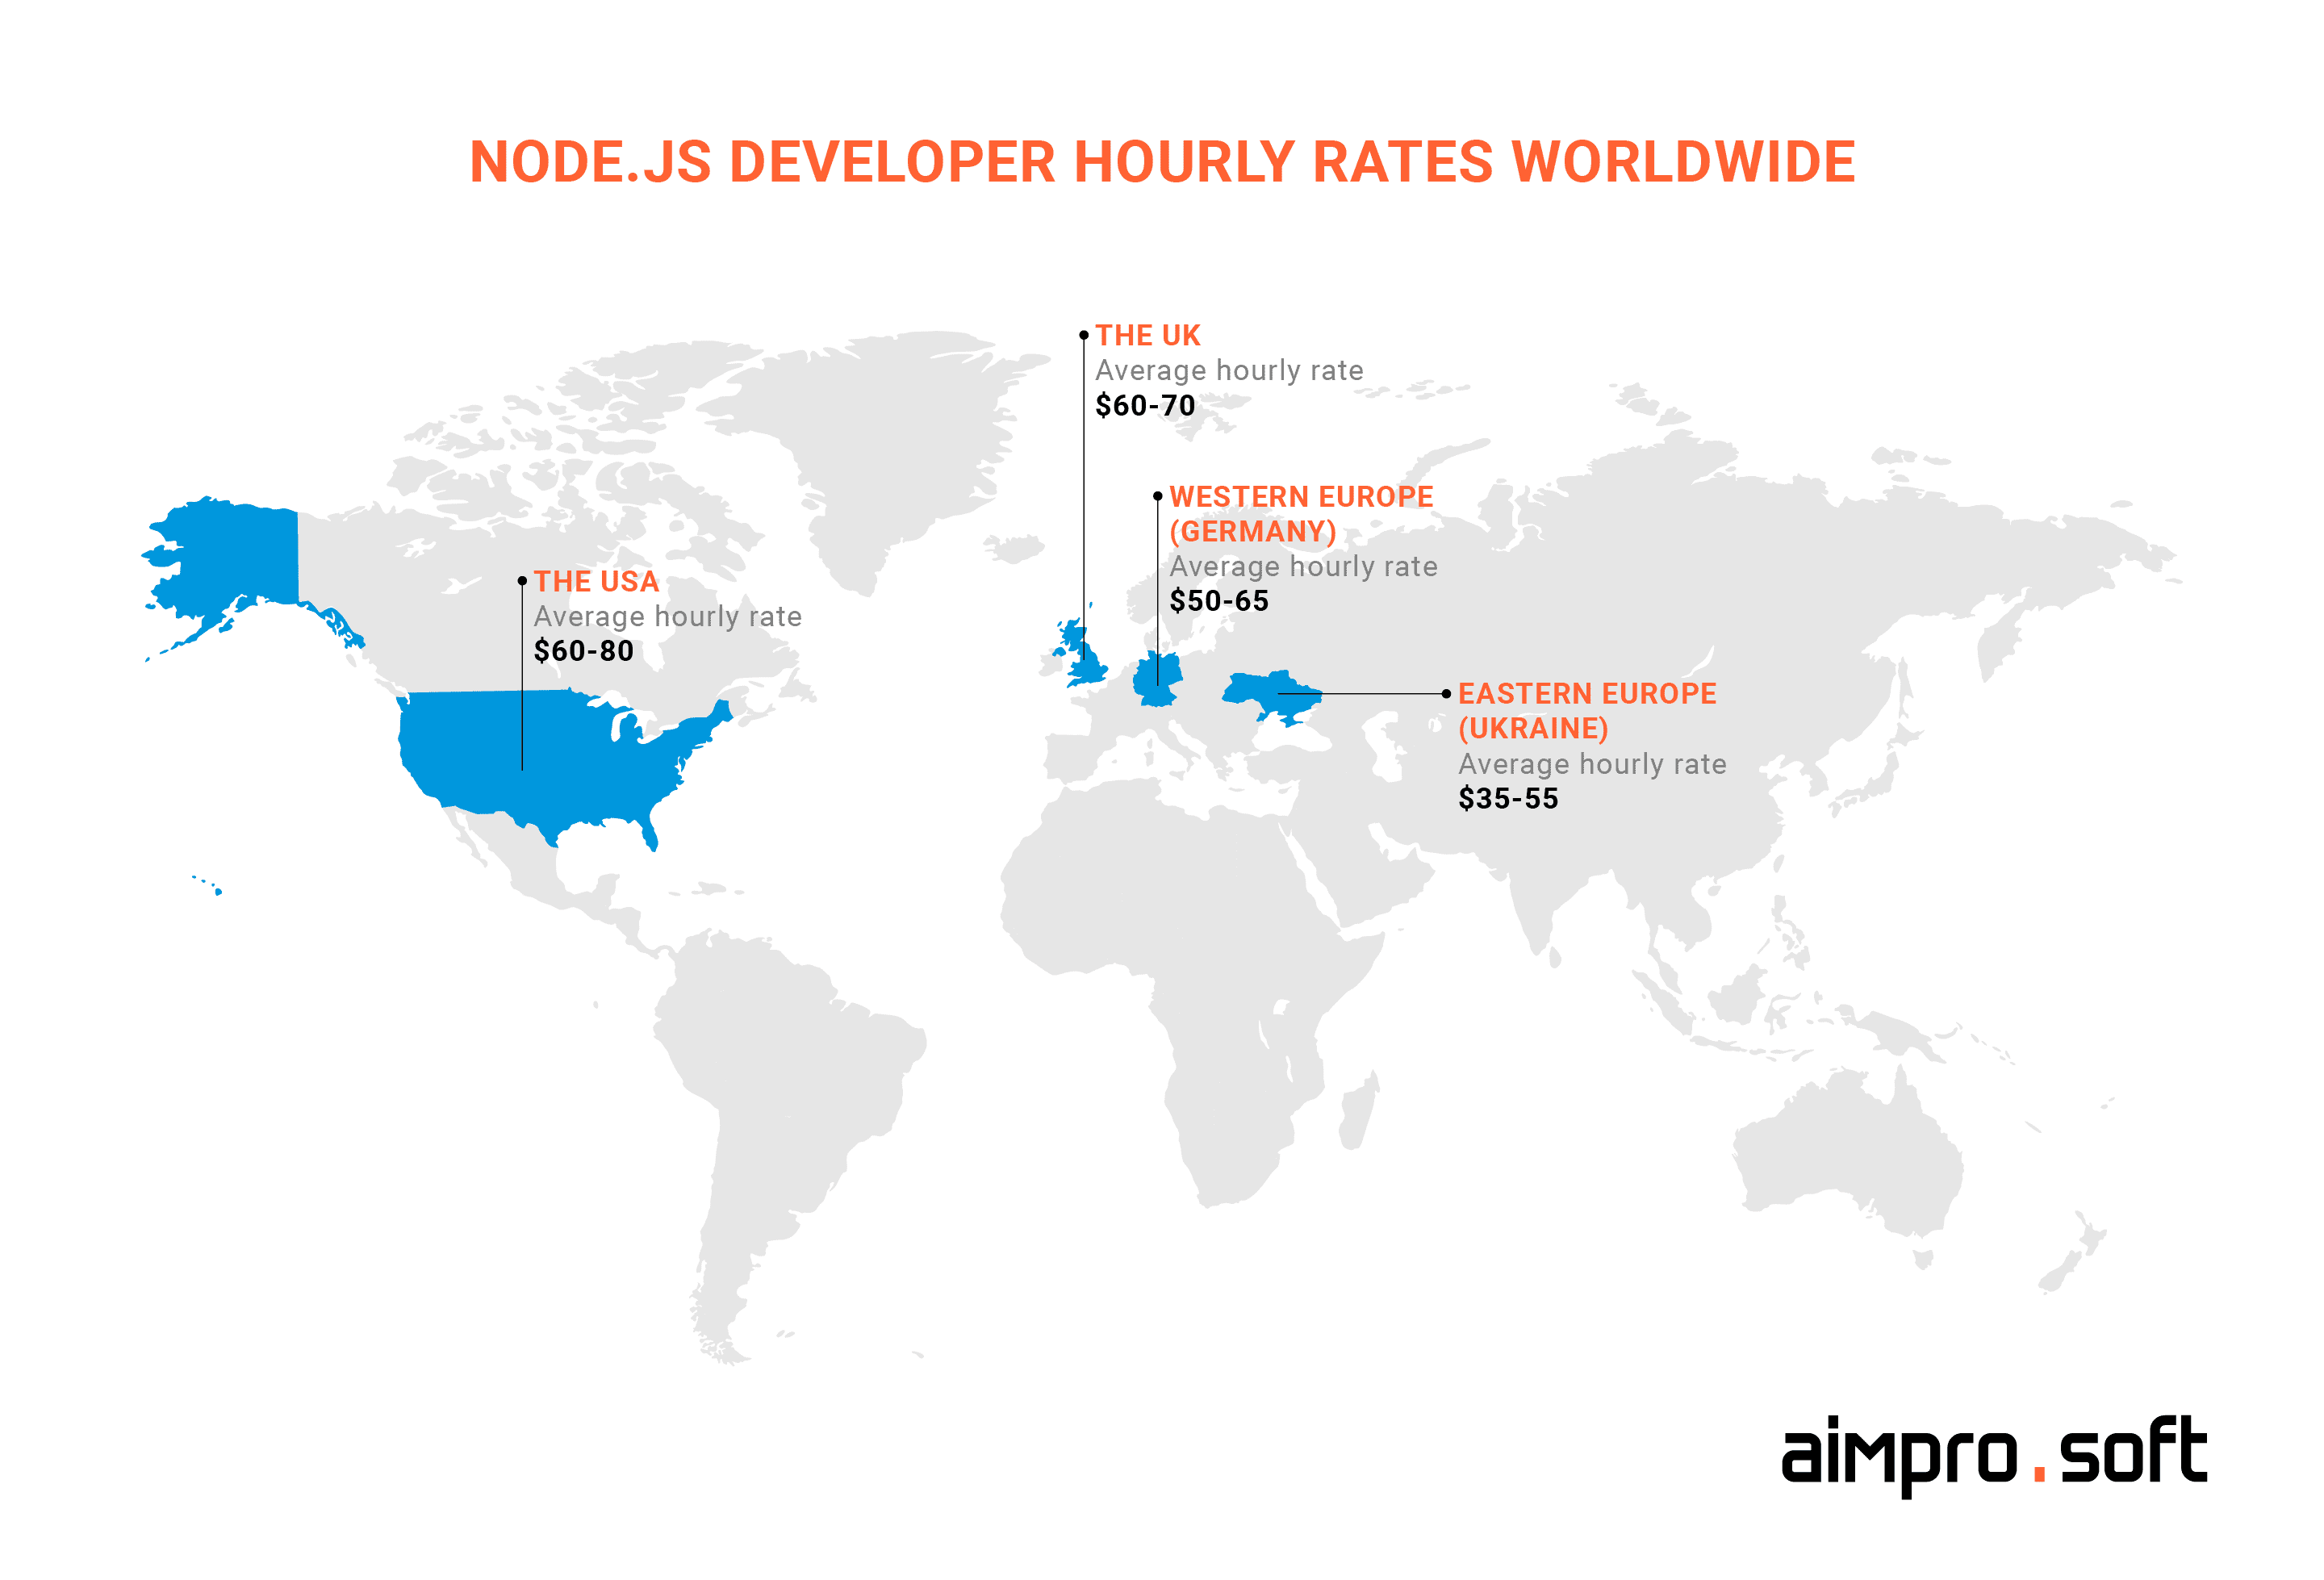 Node.js developer hourly rates around the world